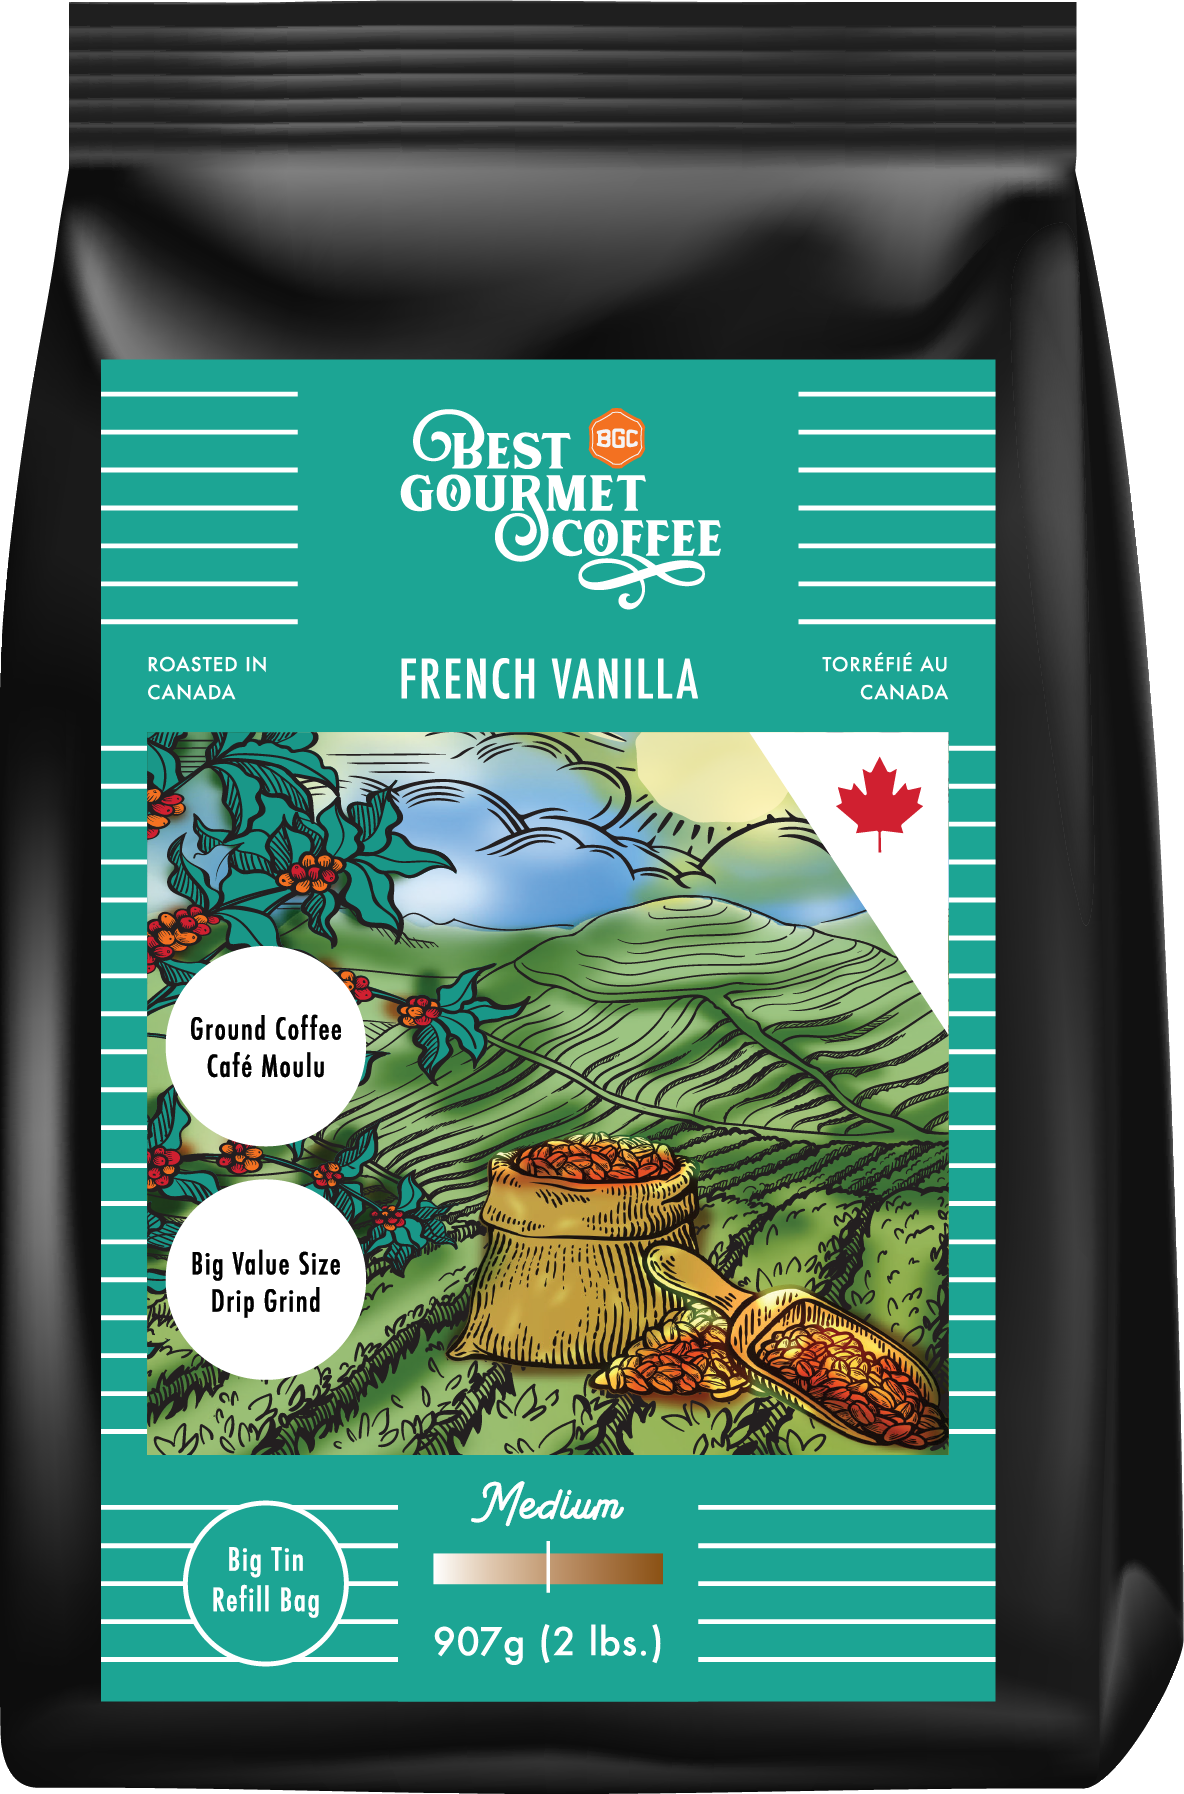 French Vanilla Coffee -2lb-907g Ground Coffee - Drip Grind - Medium Roast